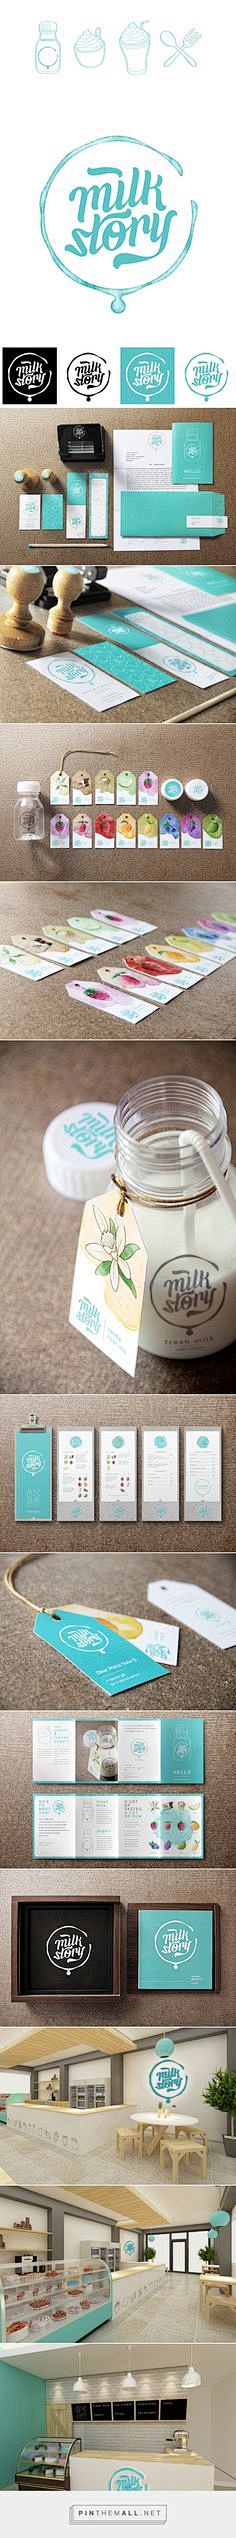 Milk Story Brand Ide...